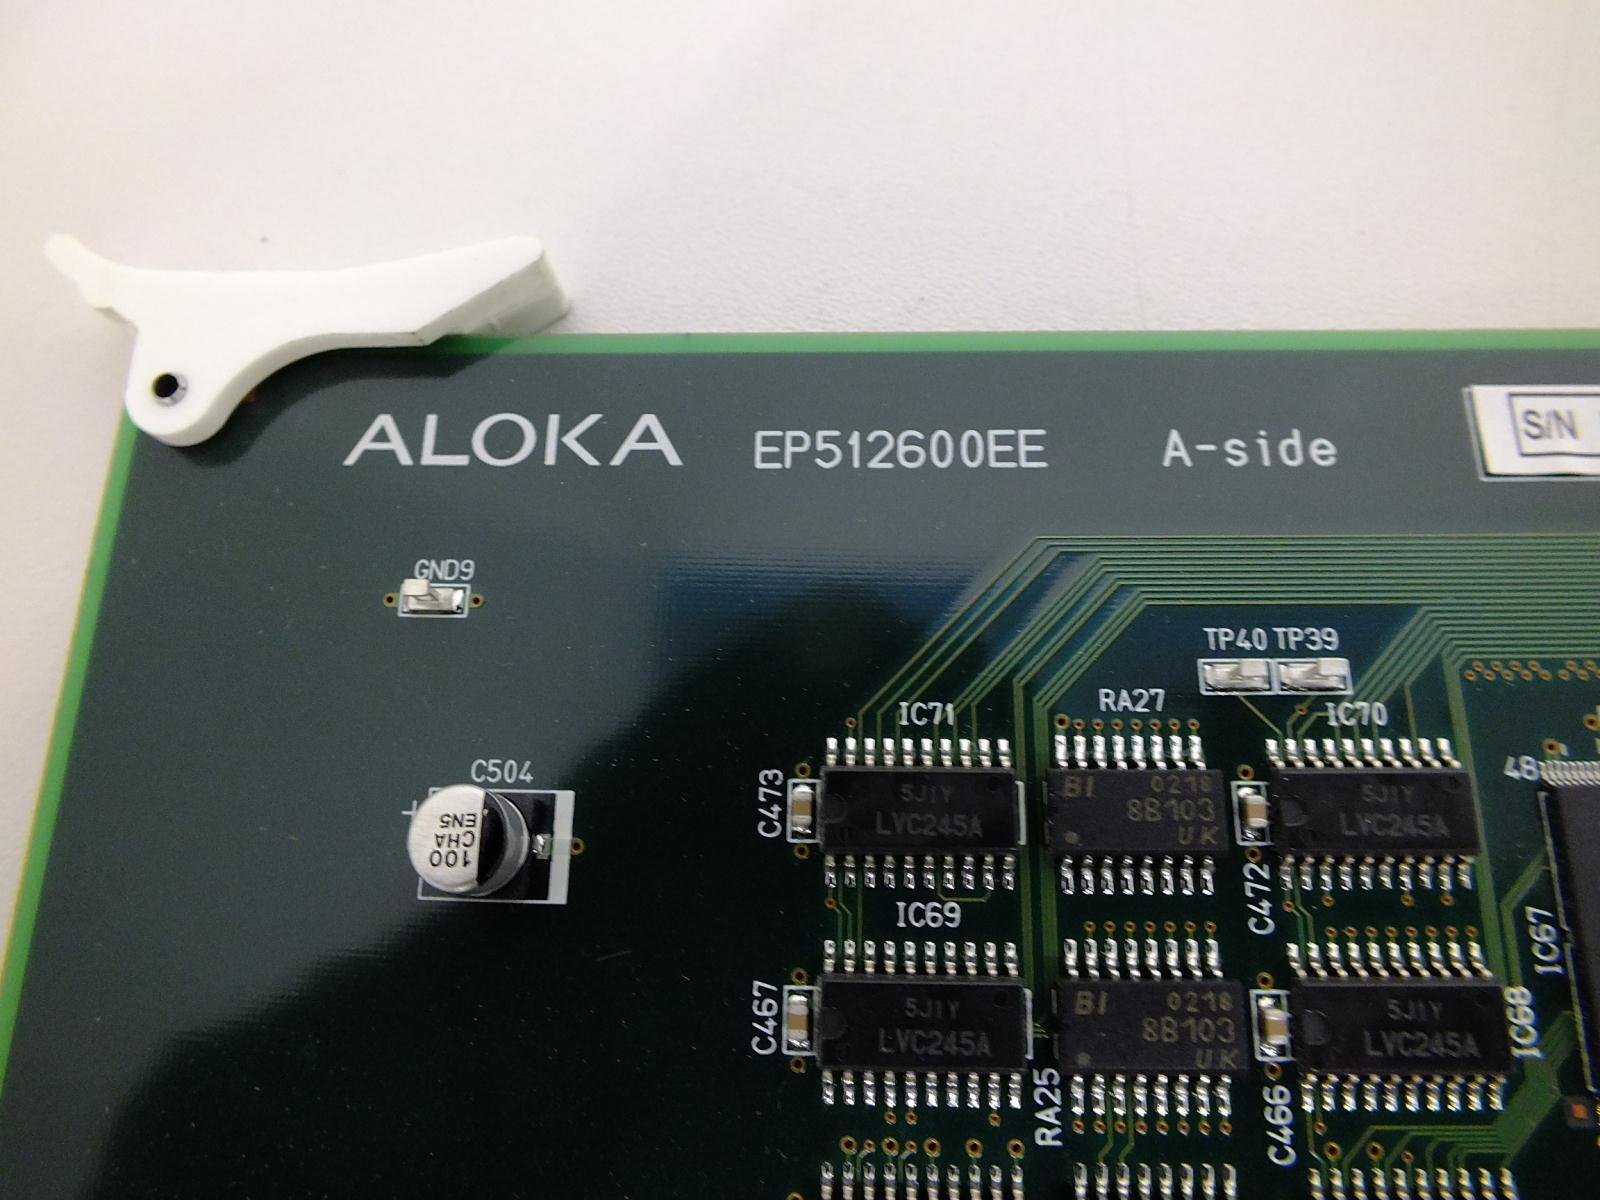 Aloka Prosound Ultrasound SSD-3500SV Board EP512600EE A-Side DIAGNOSTIC ULTRASOUND MACHINES FOR SALE